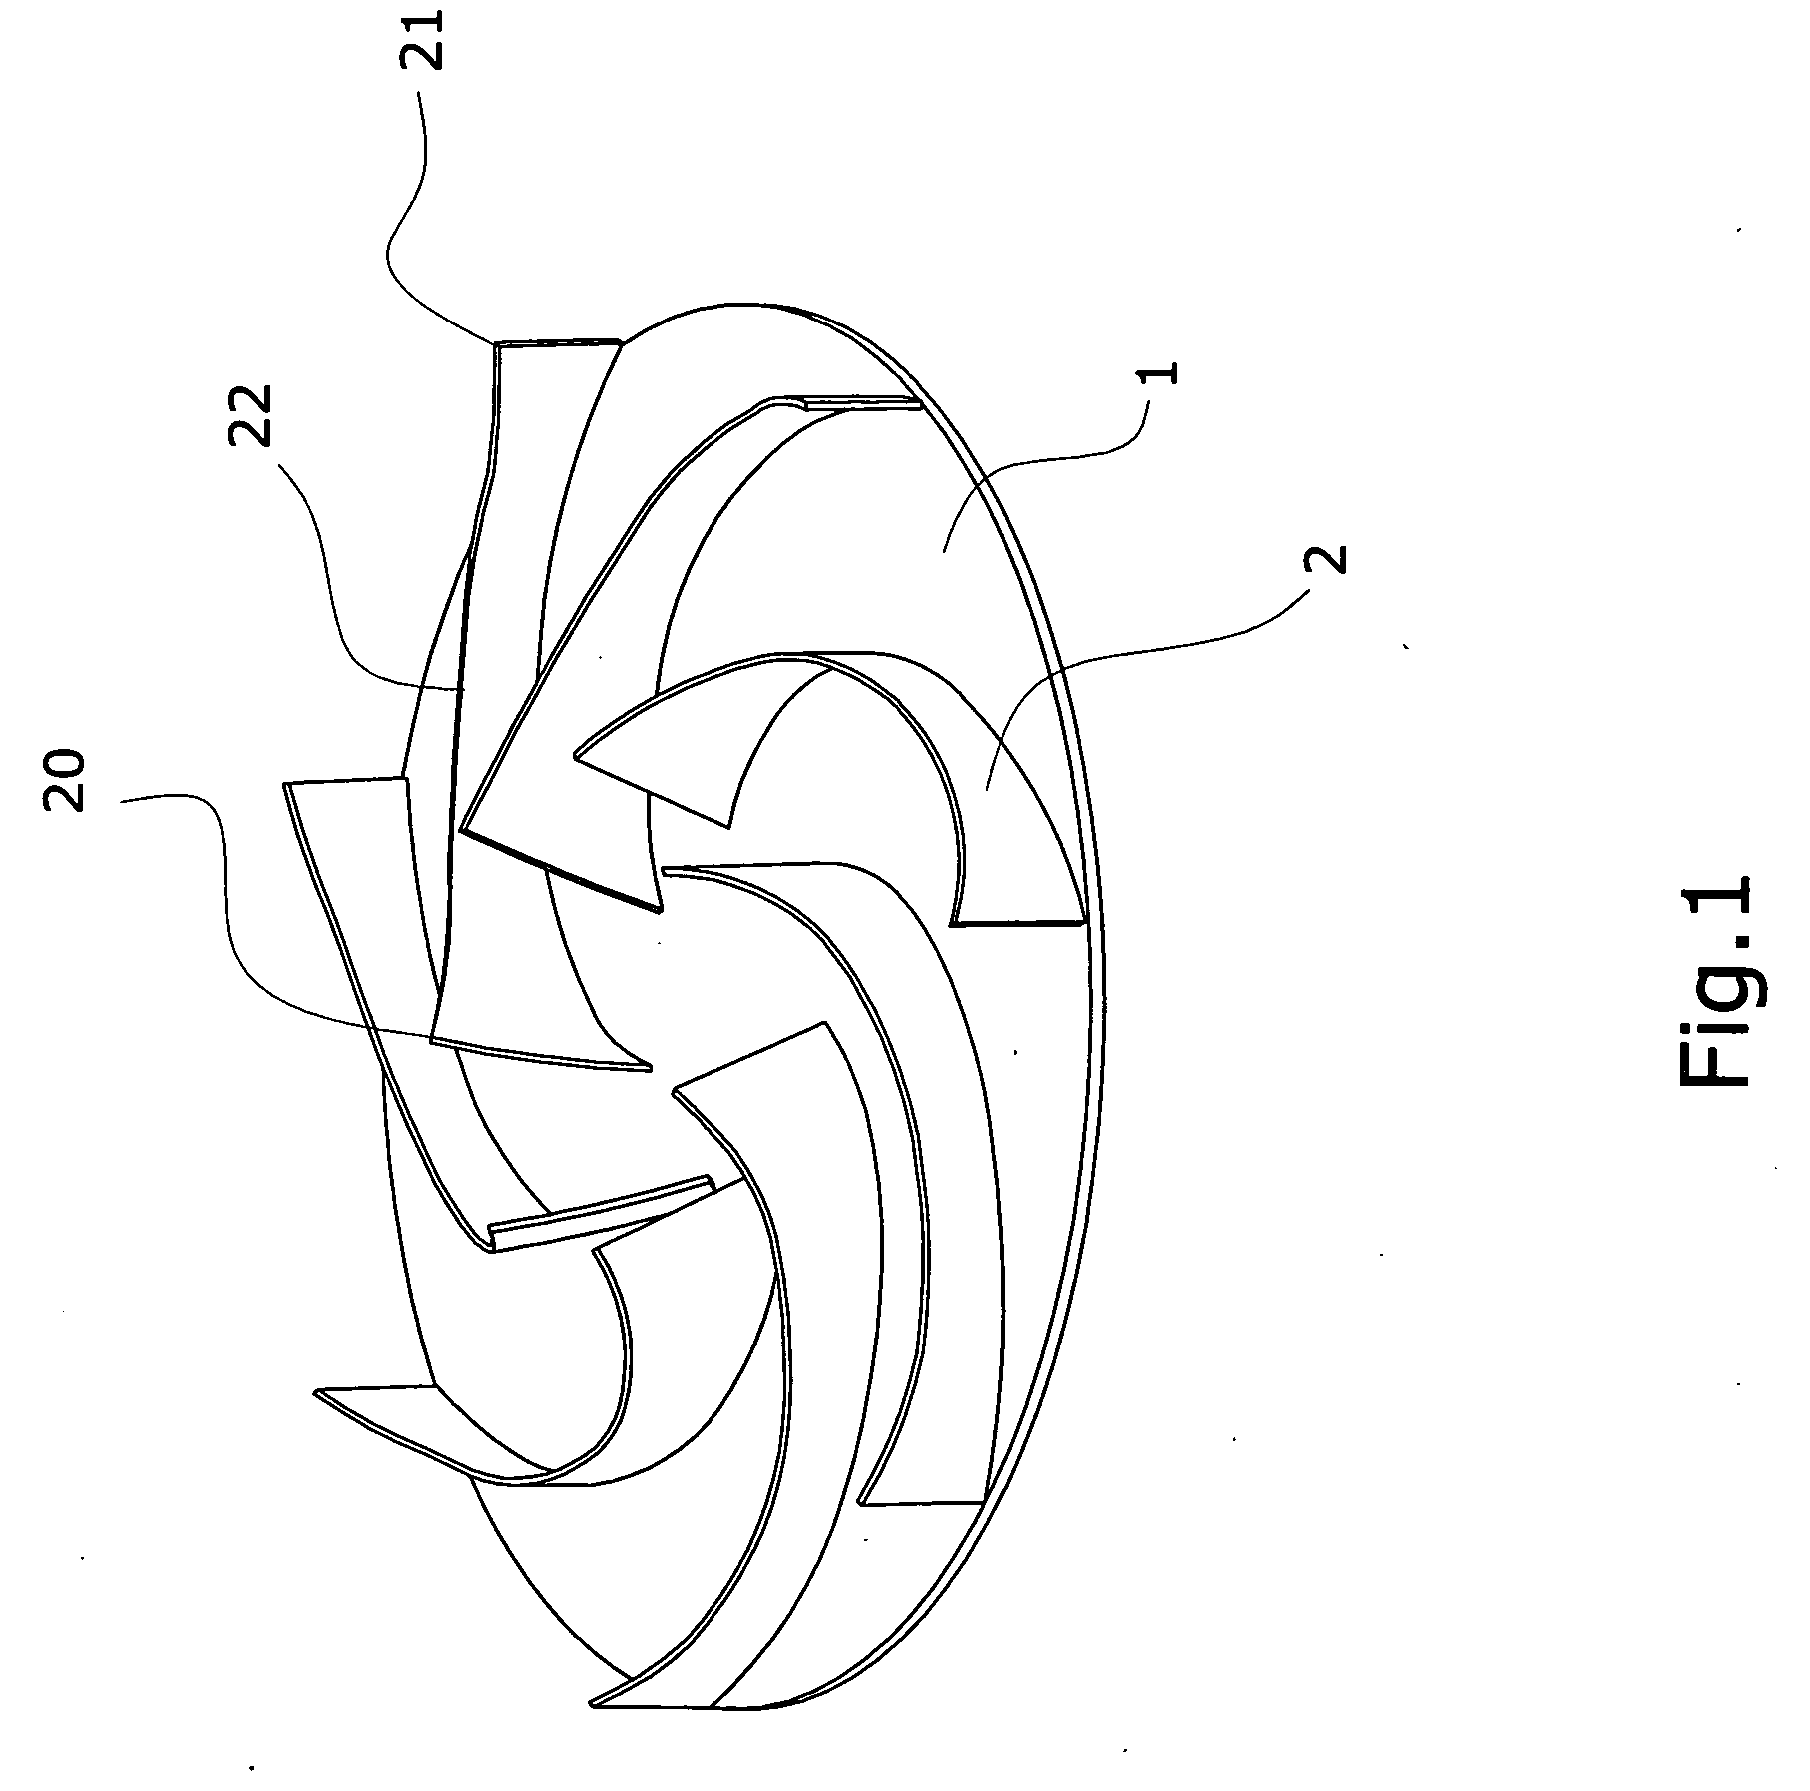 Structure of turbine blower